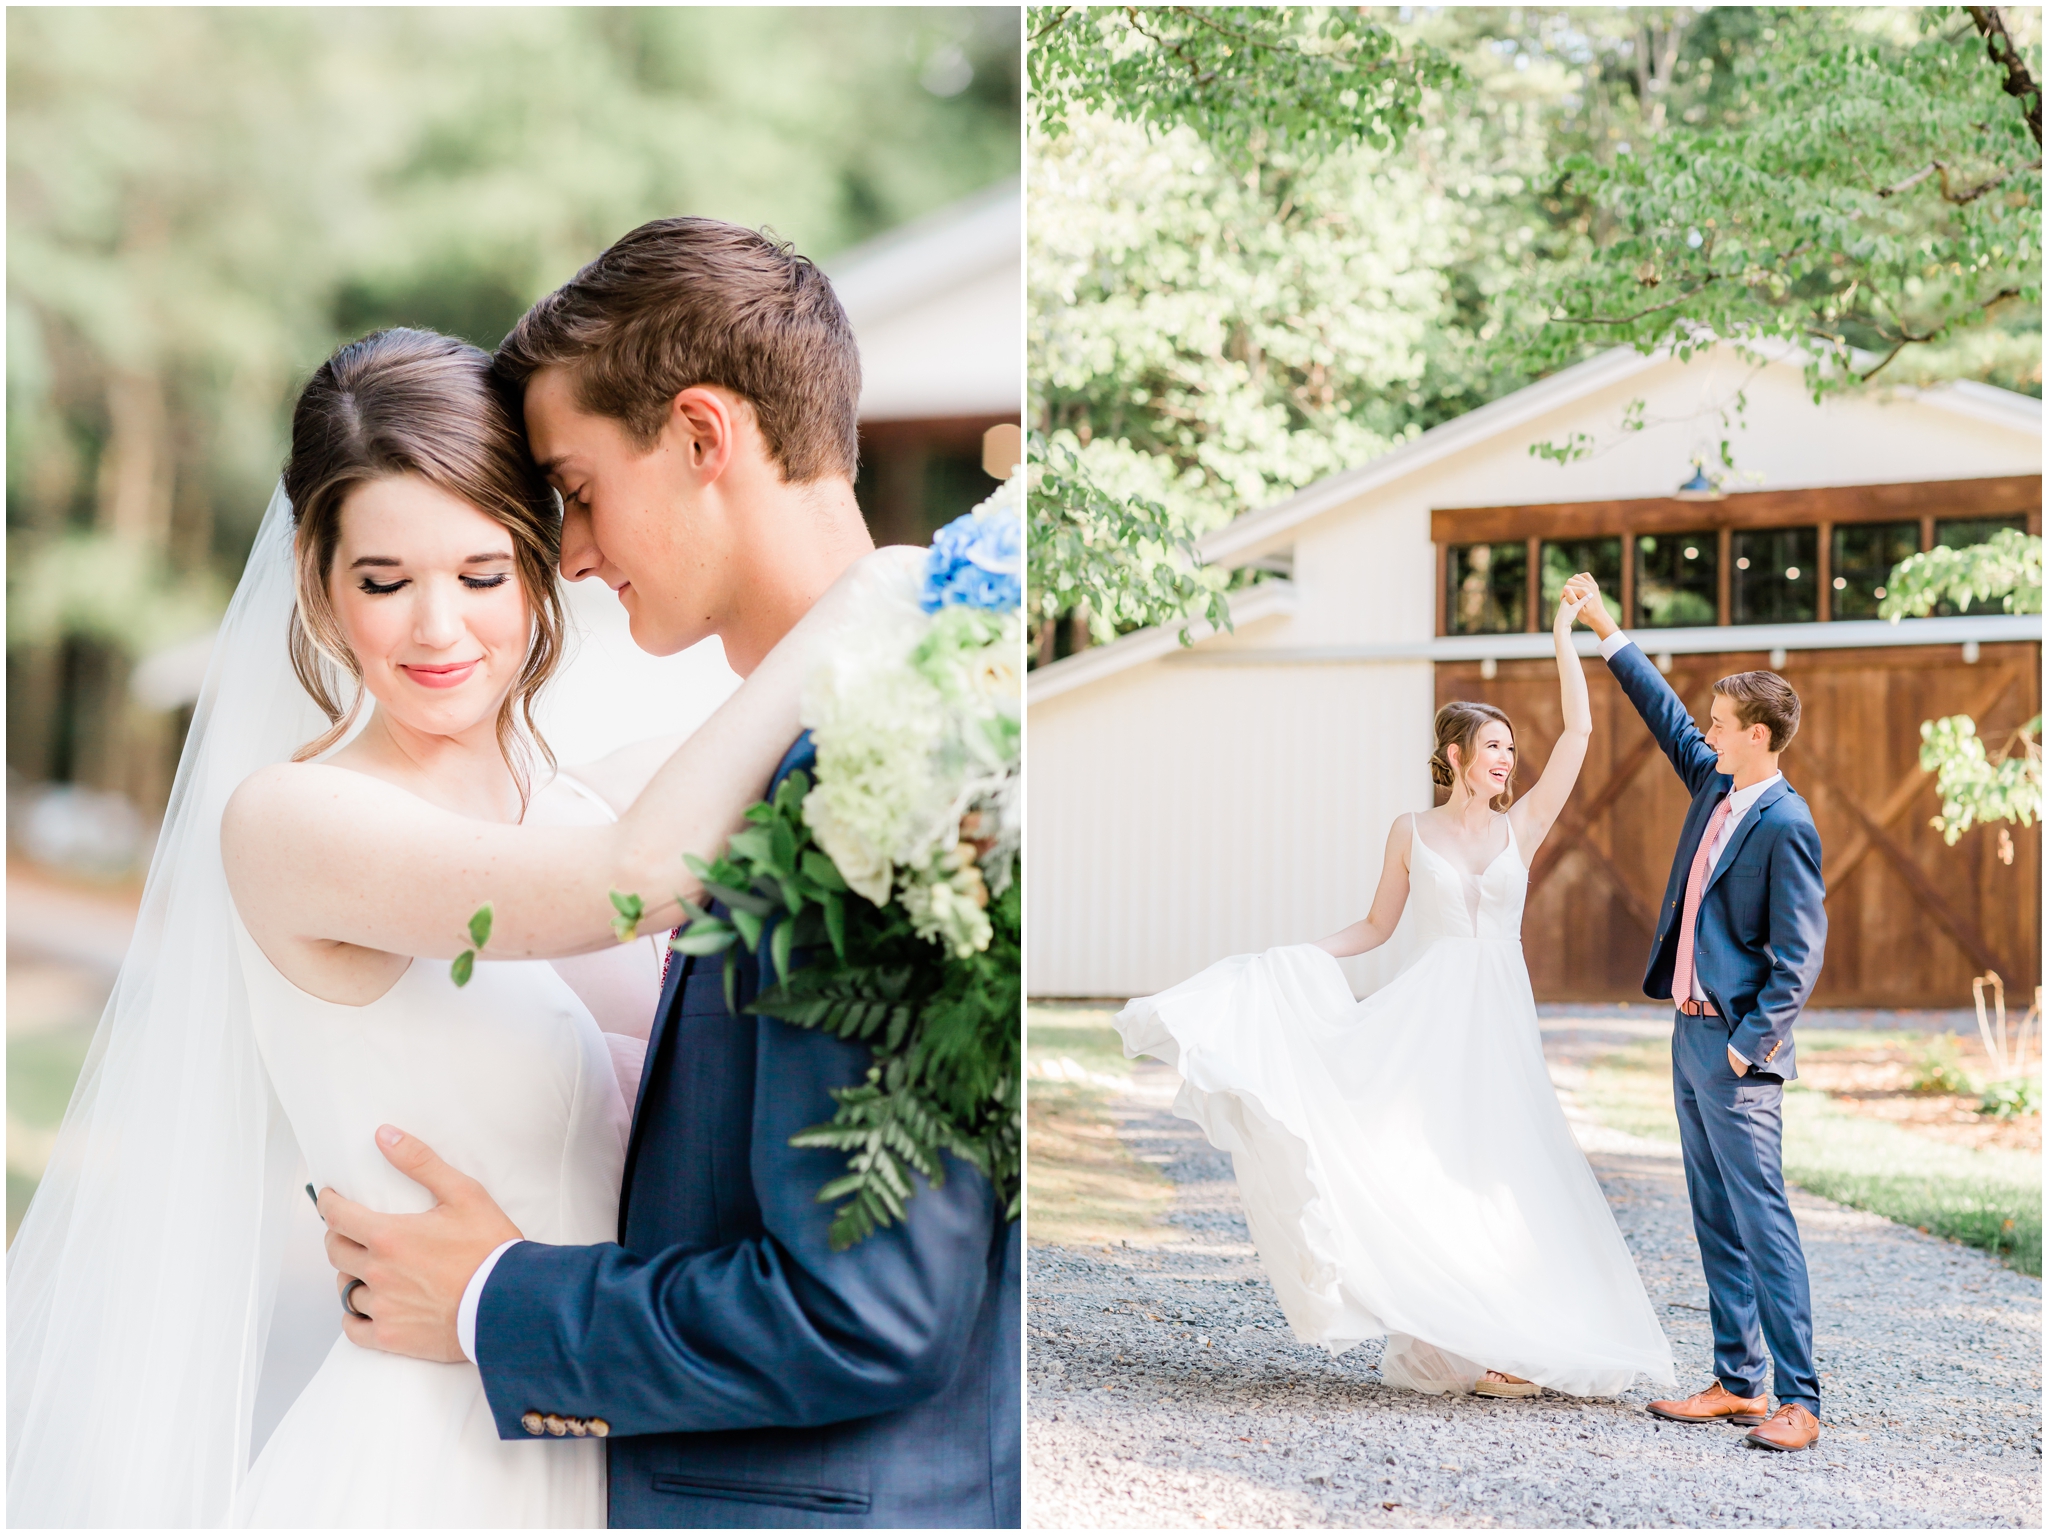 Why I love Chattanooga Weddings by Alyssa Rachelle Photography